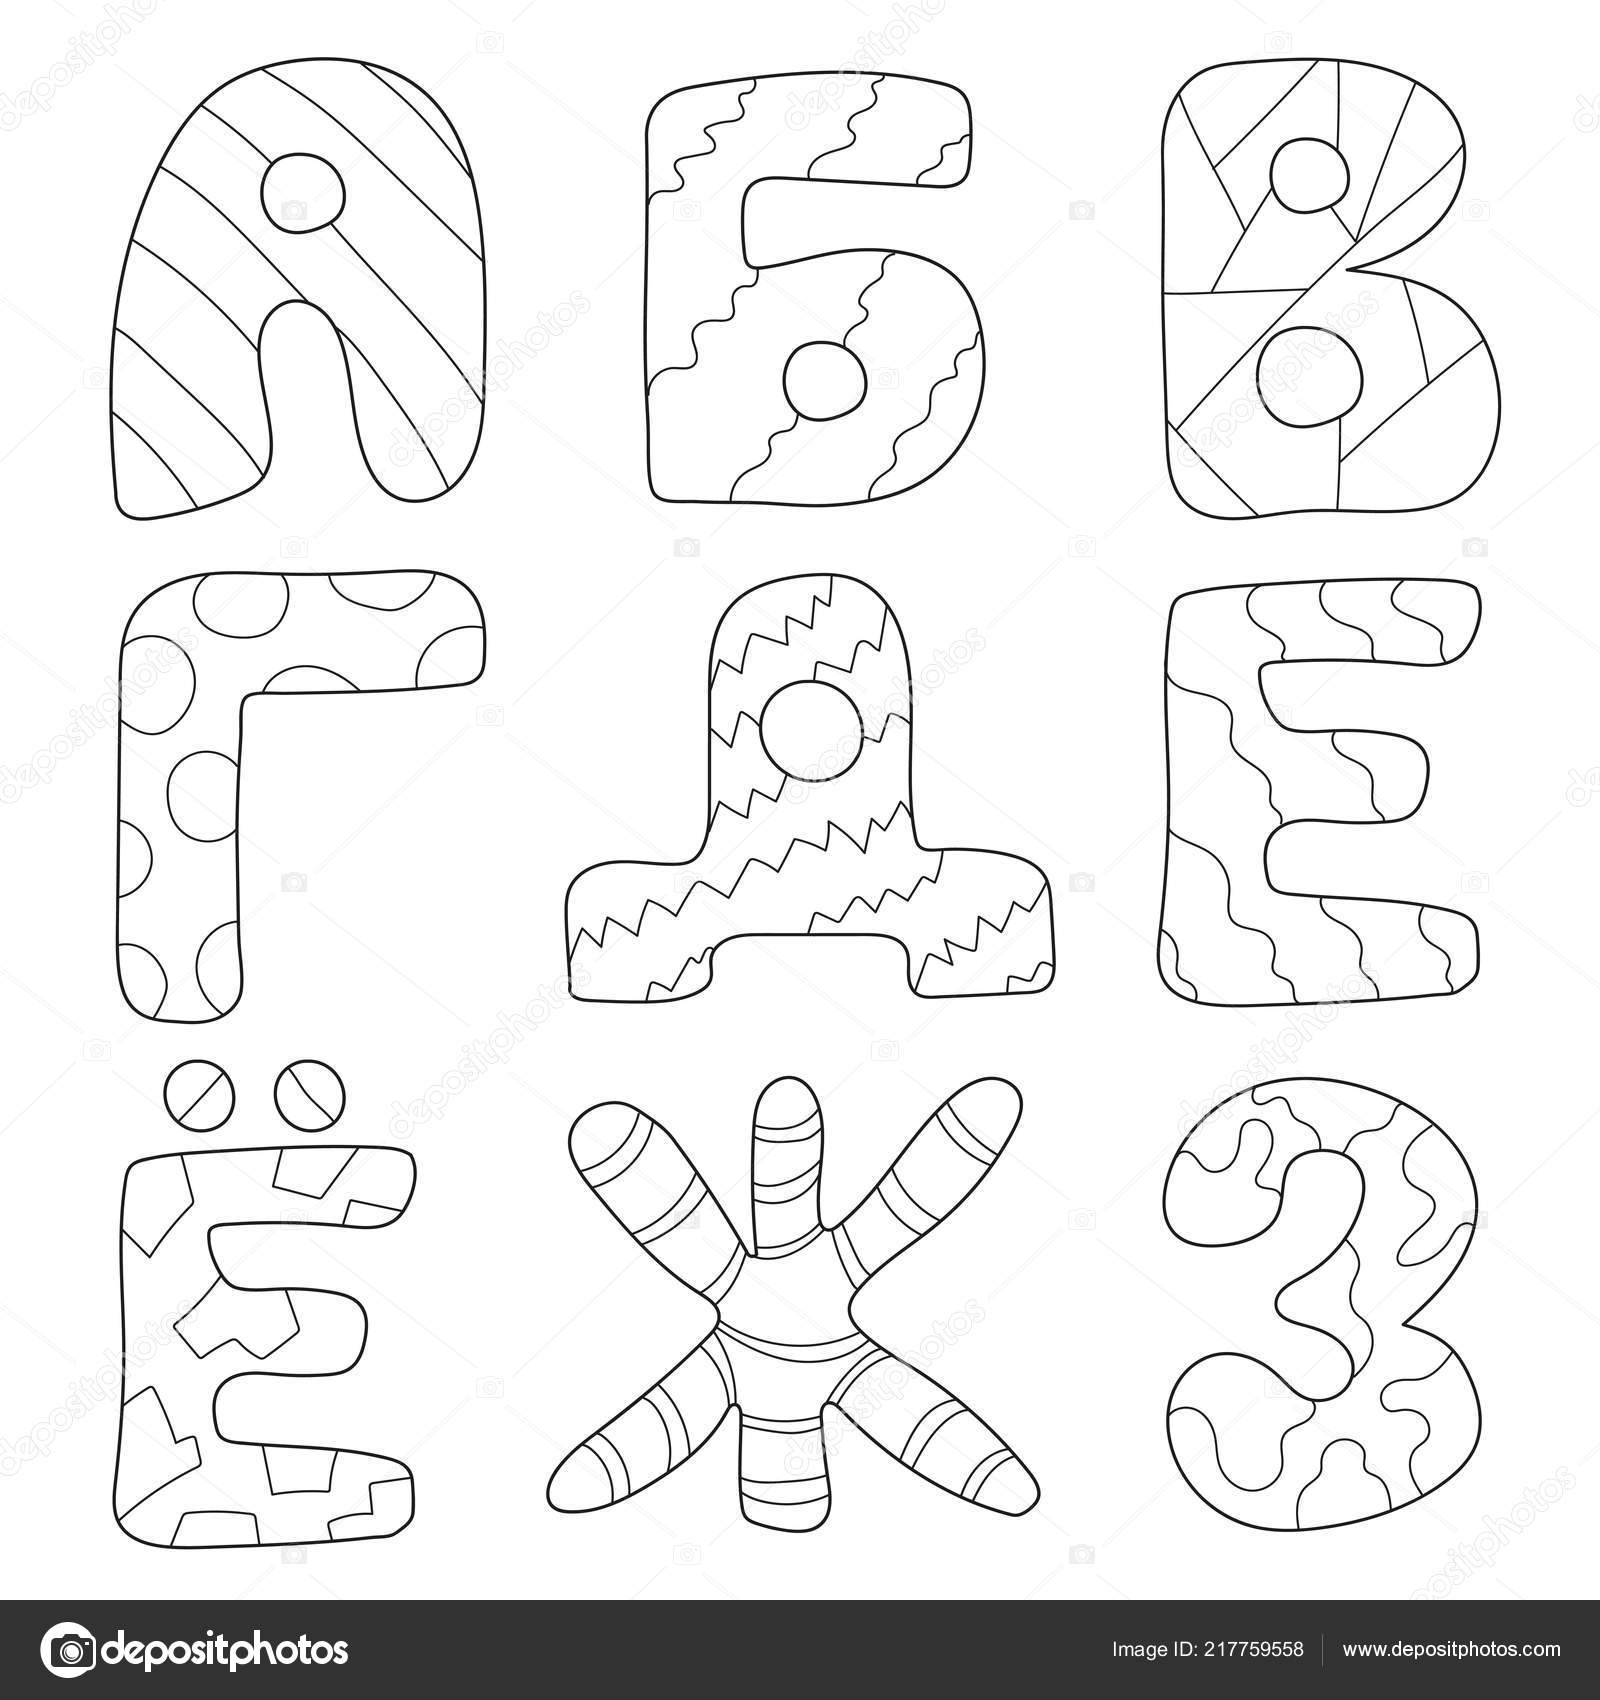 Cartoon alphabet for children design russian letters for kids